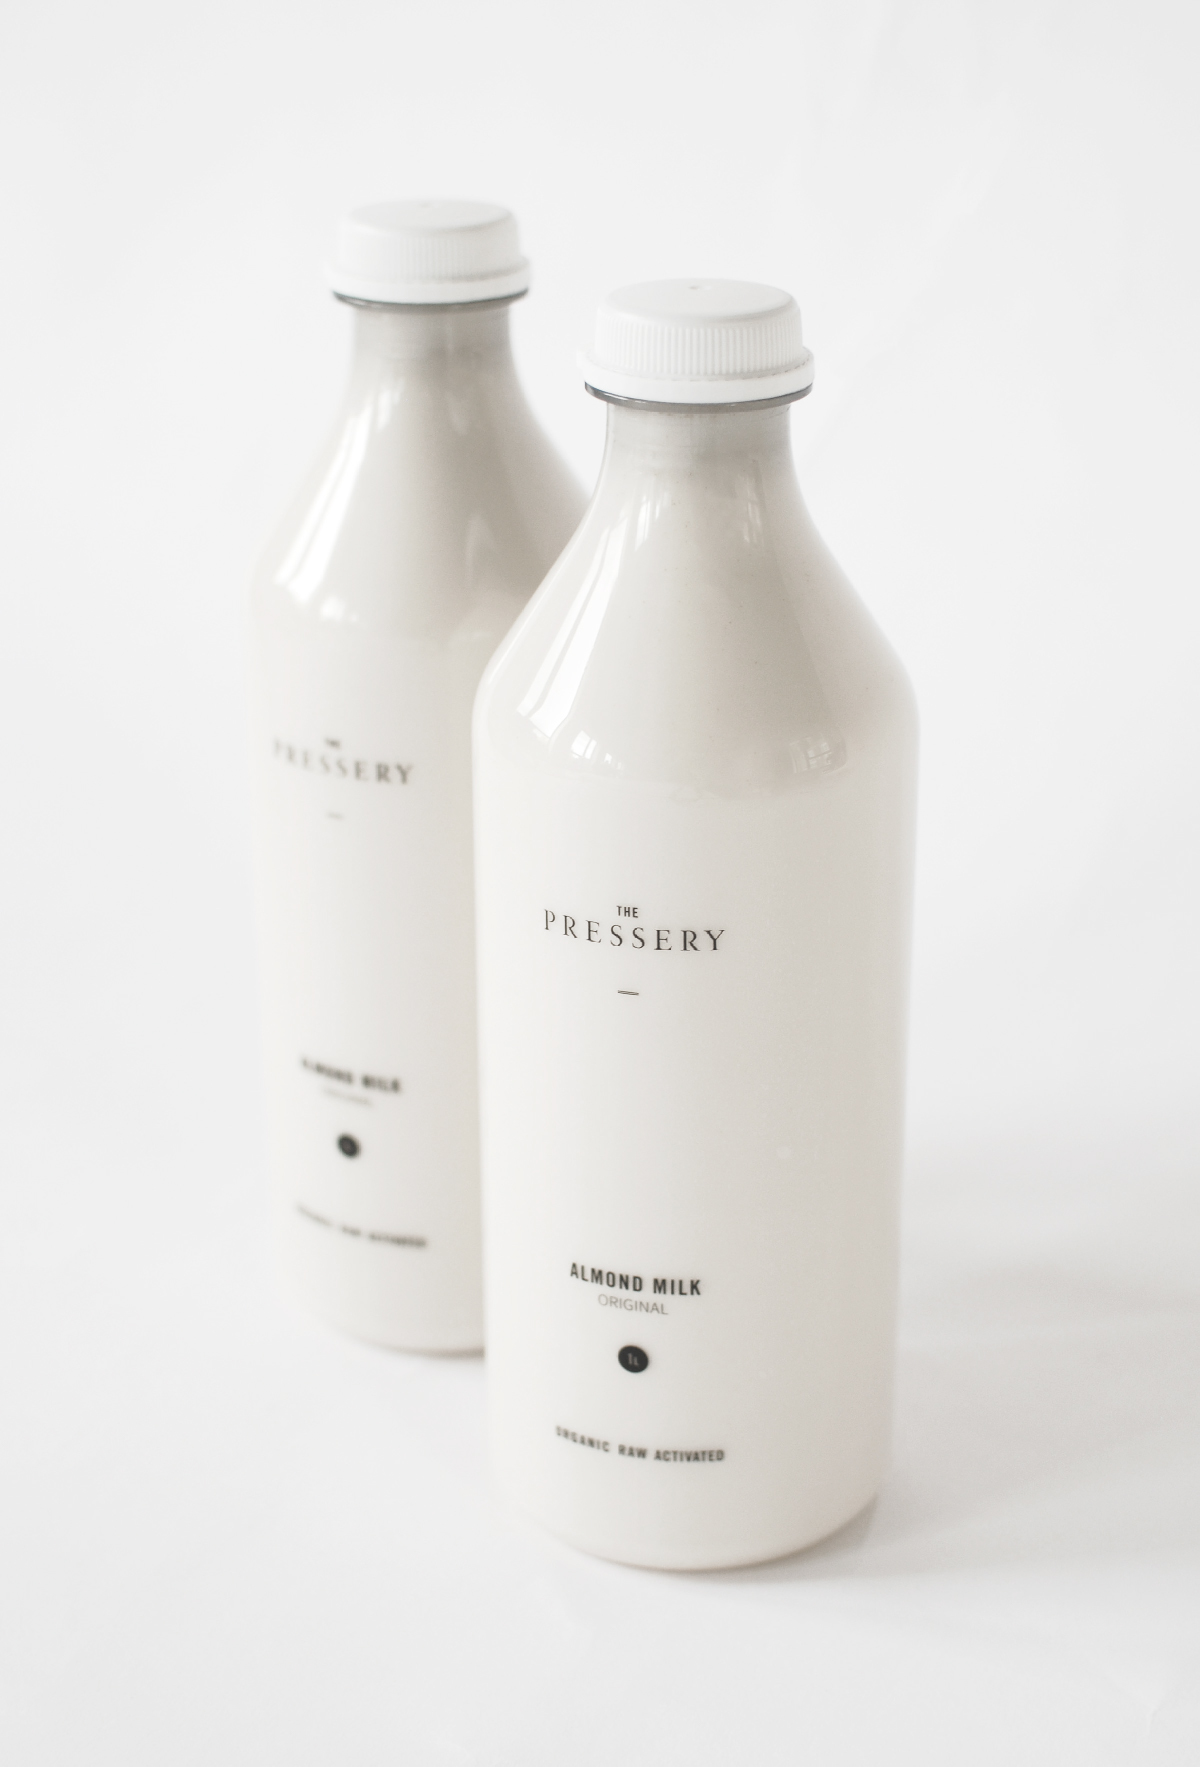 Pressery almond milk corporate identity fonts artisan bottles organic produce luxury Quality logo Layout design